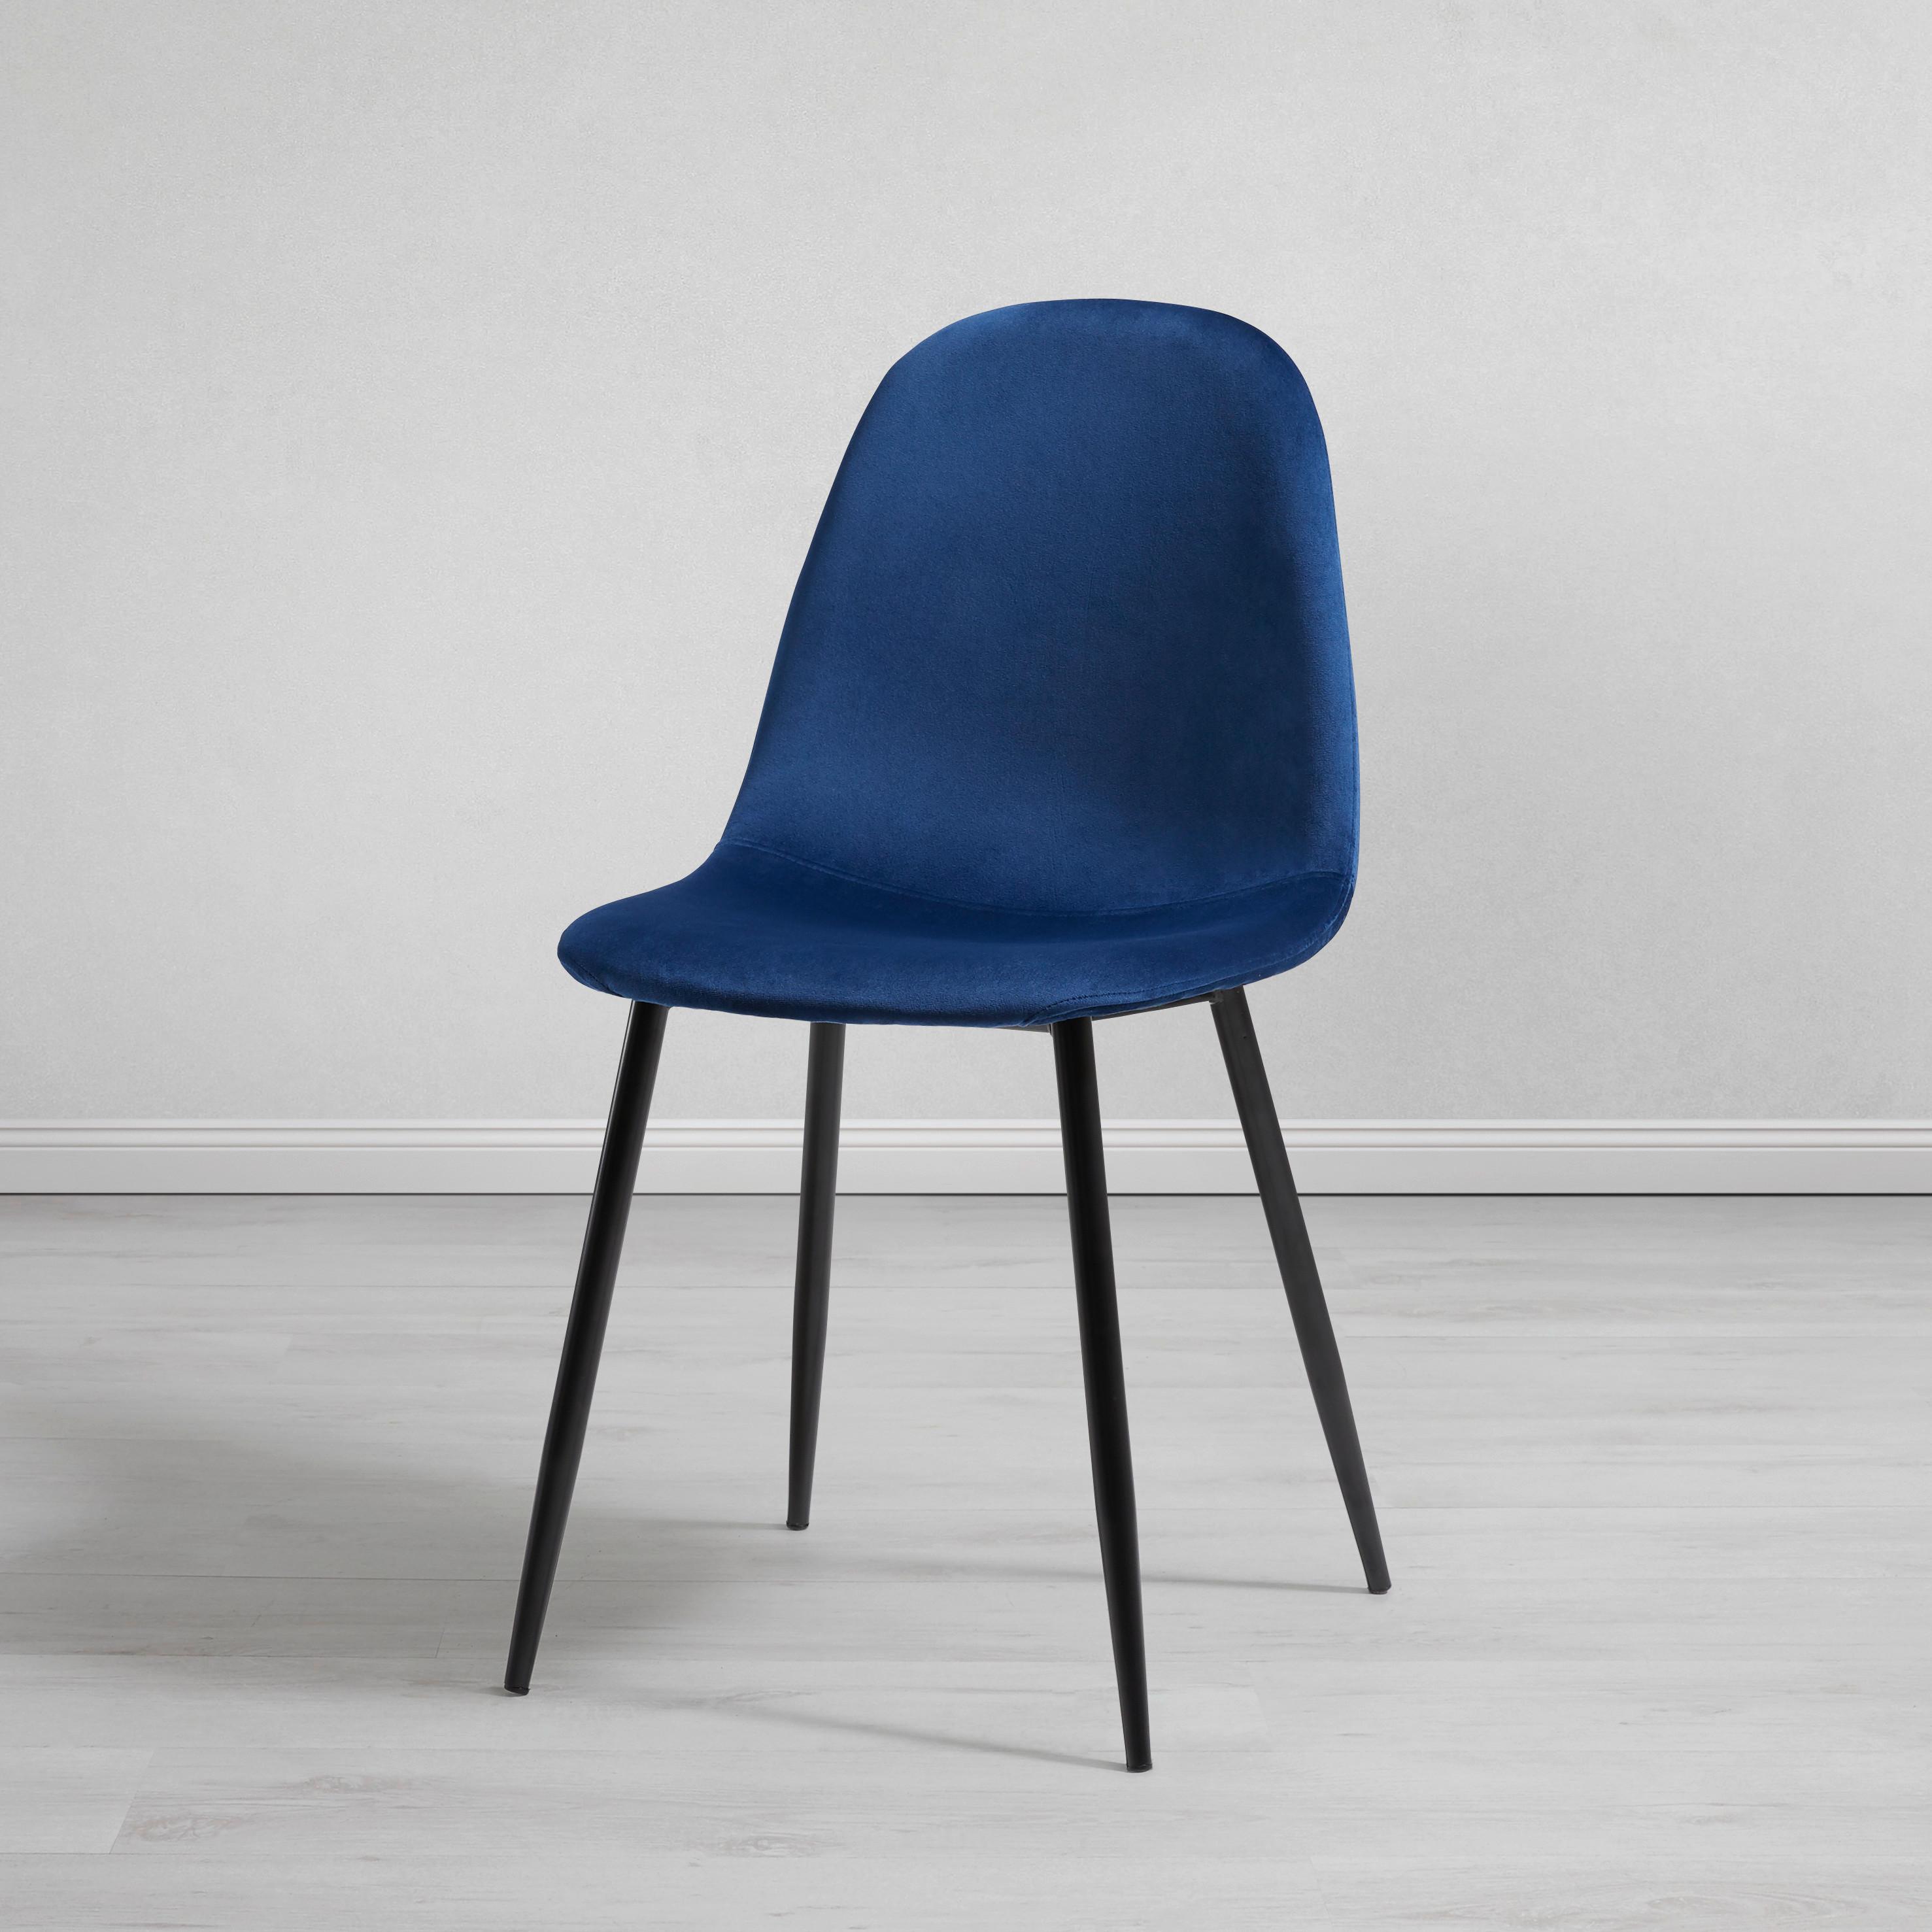 Židle Lio - modrá/černá, Moderní, kov/dřevo (43/86/55cm) - Modern Living